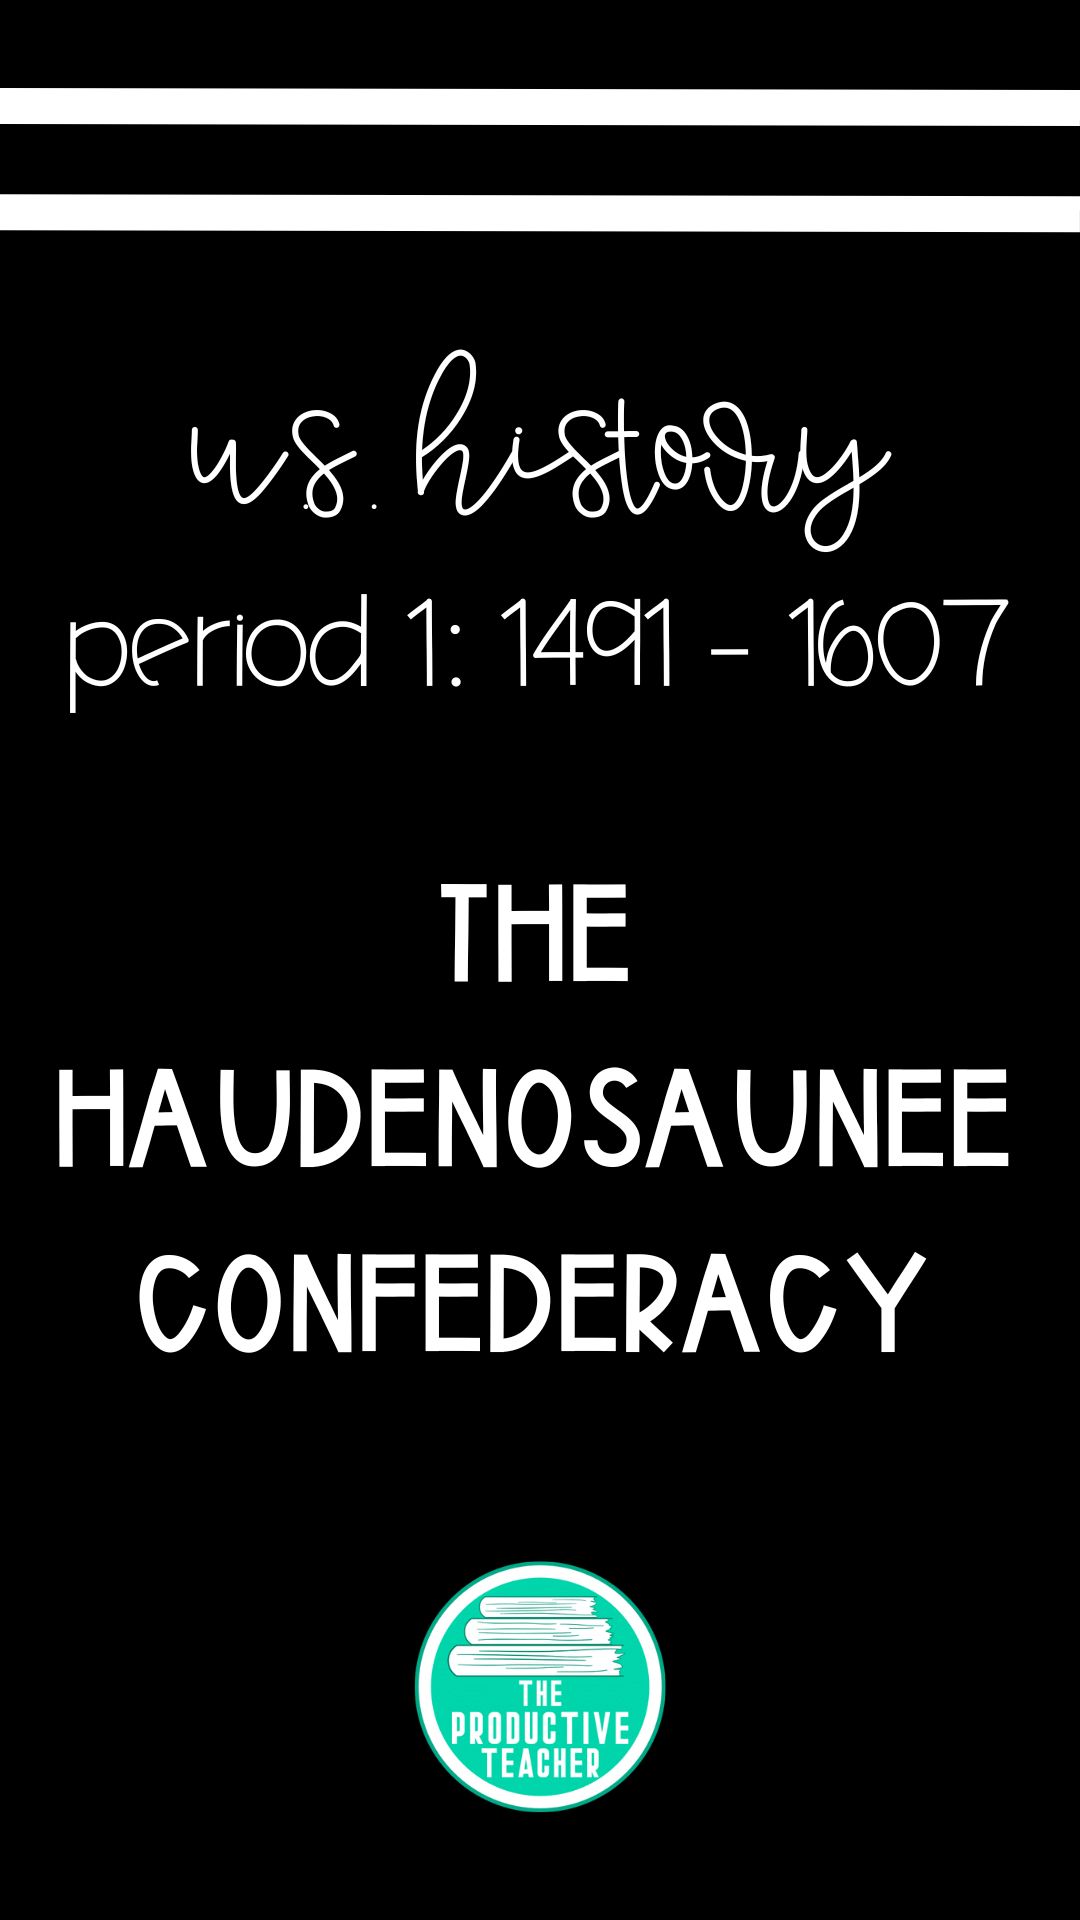 The Haudenosaunee Confederacy